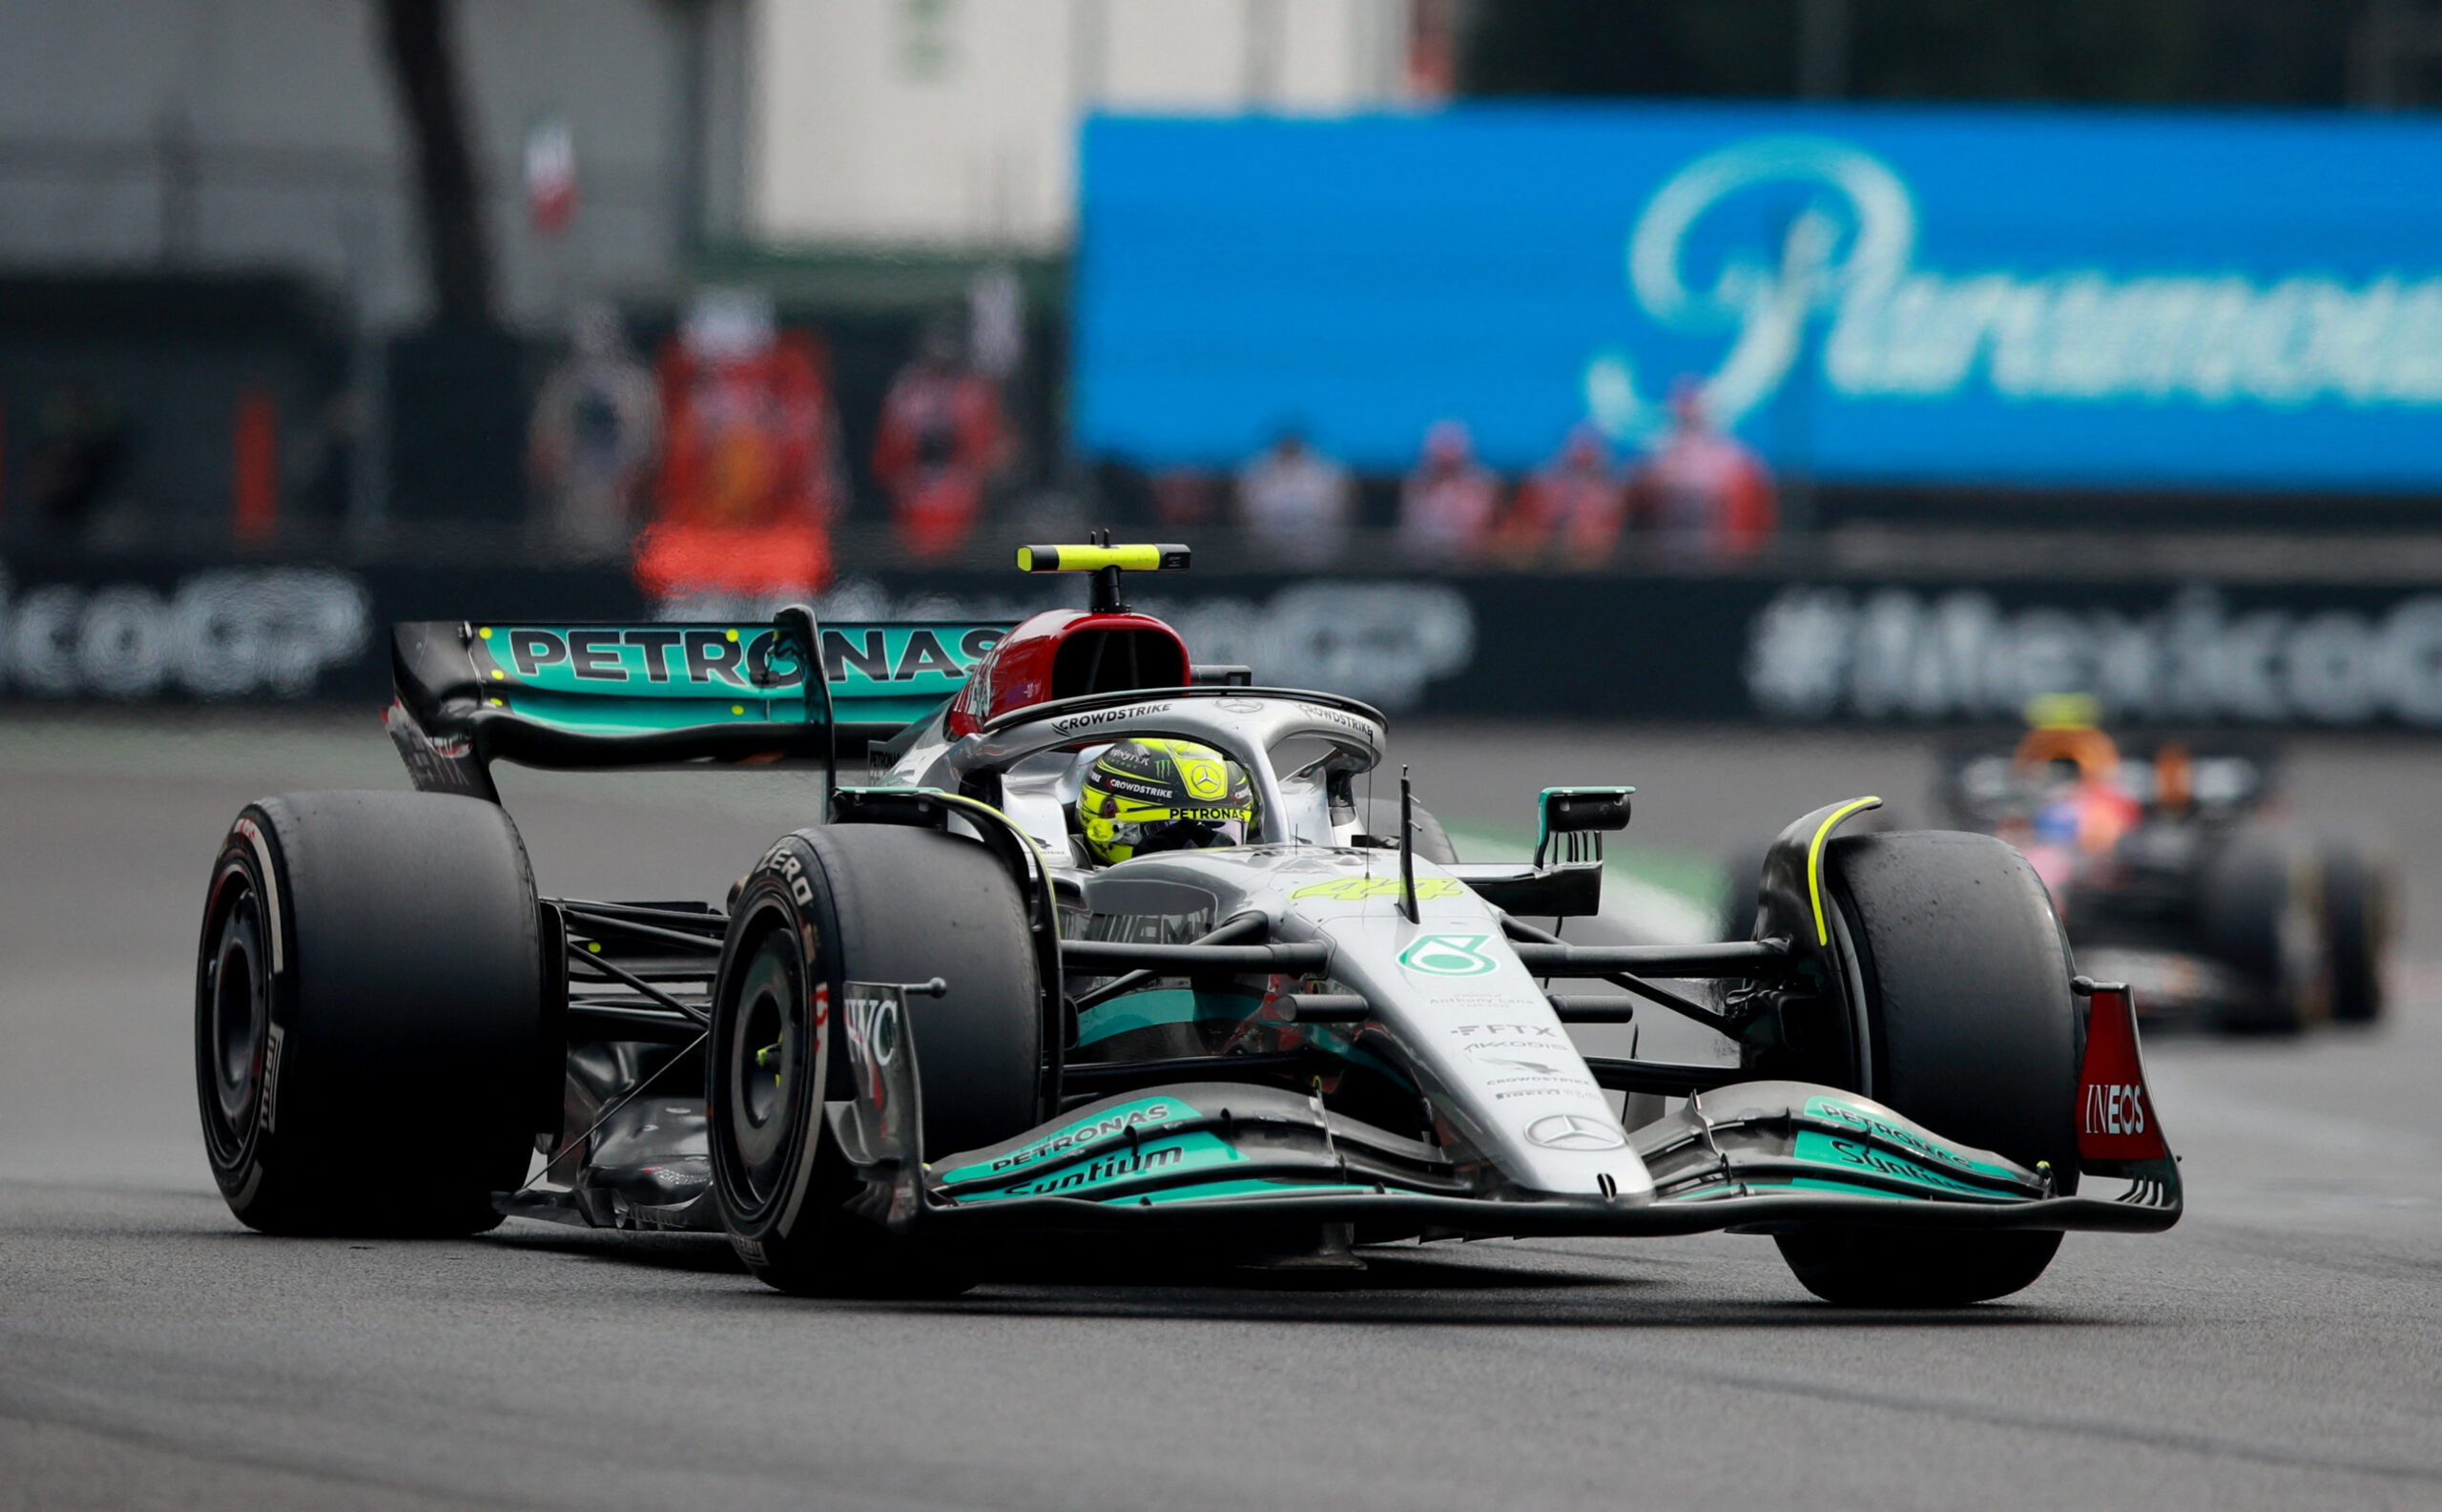 Mercedes F1 team evaluating FTX sponsorship, branding stays for now